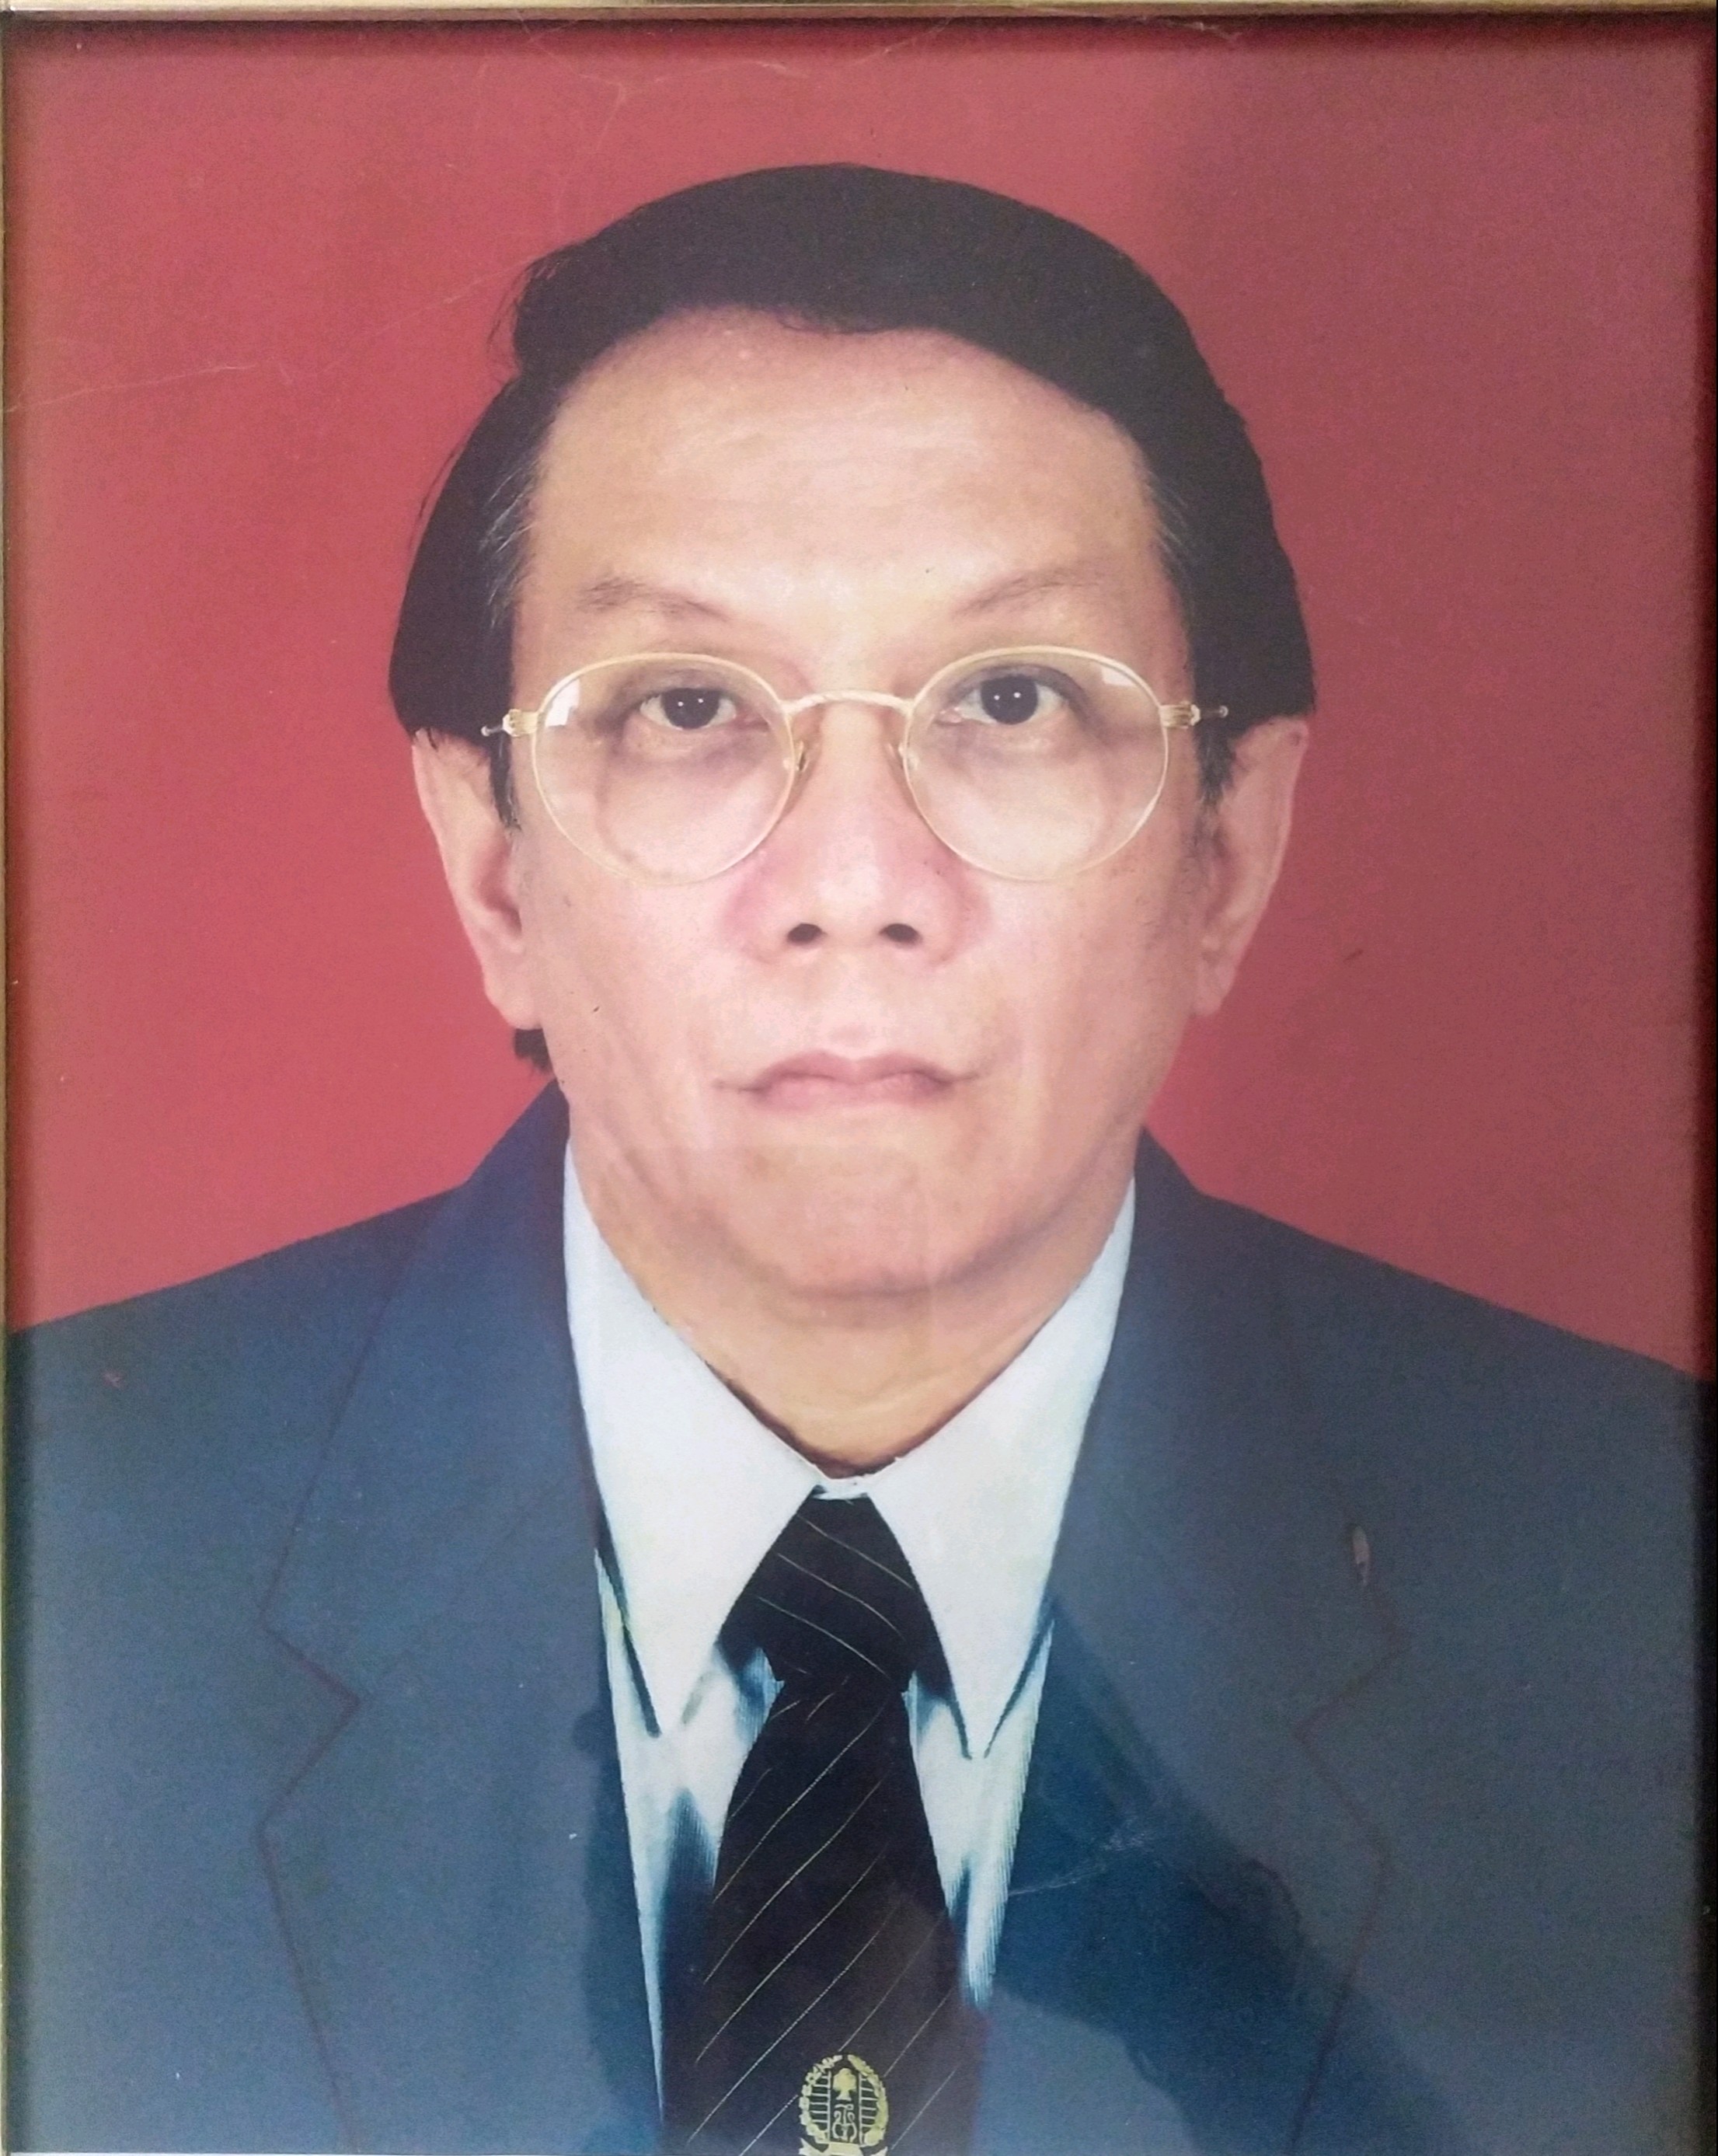 2006 2008 Drs. ARWIN ADIYAWARMAN